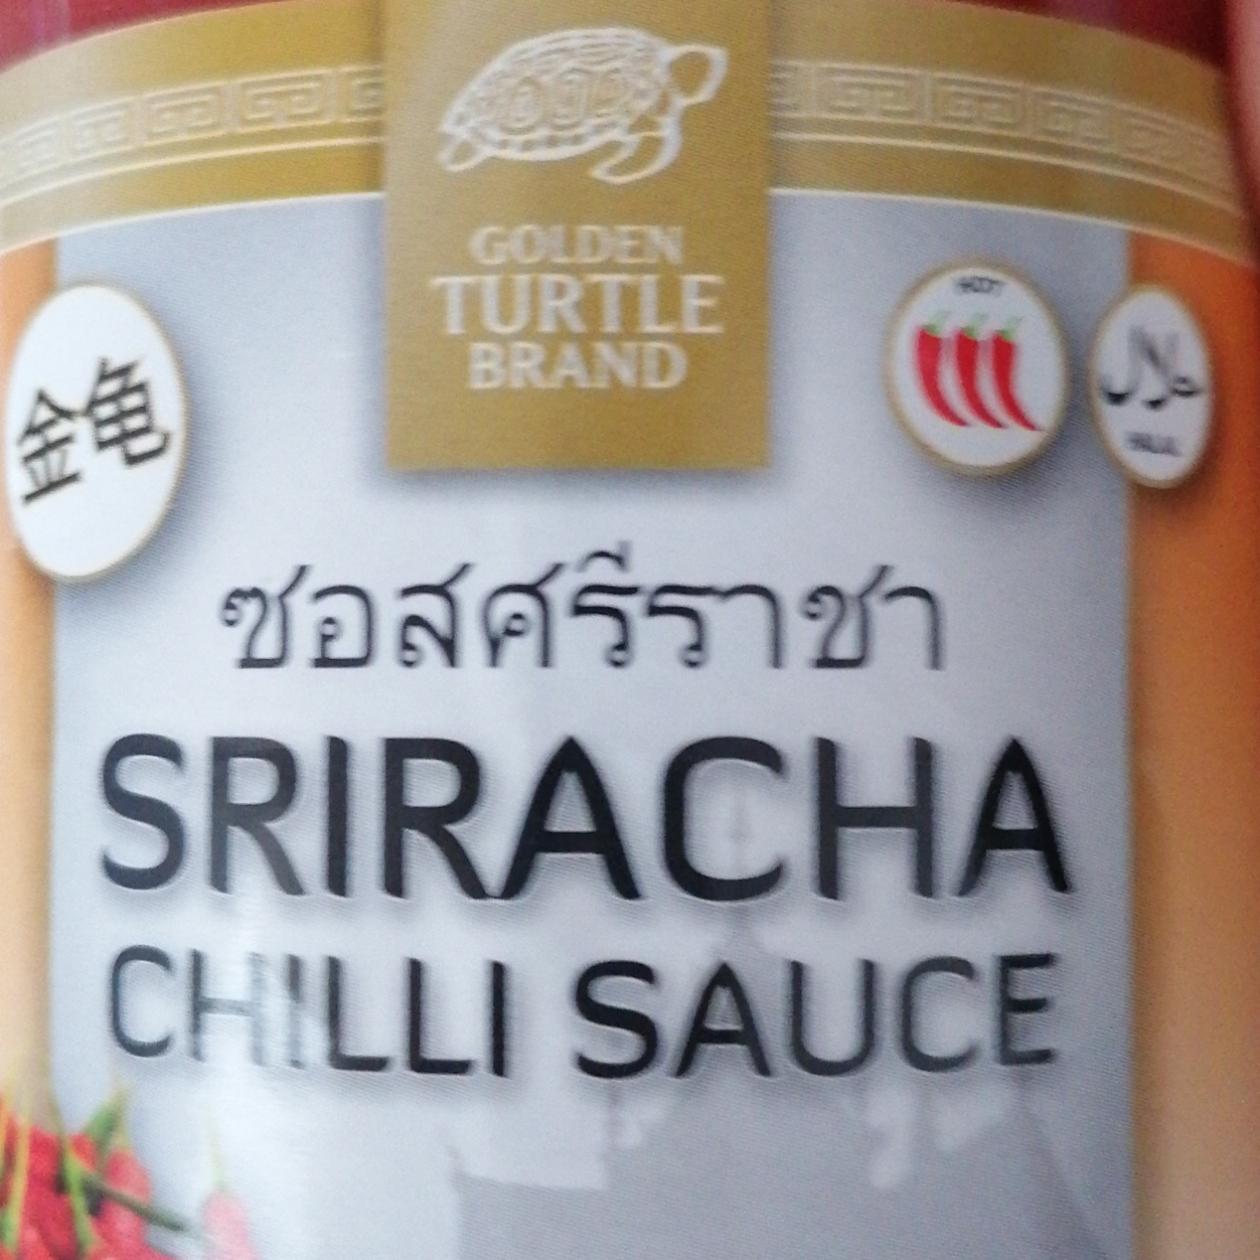 Zdjęcia - Sriracha chilli sauce golden turtle brand